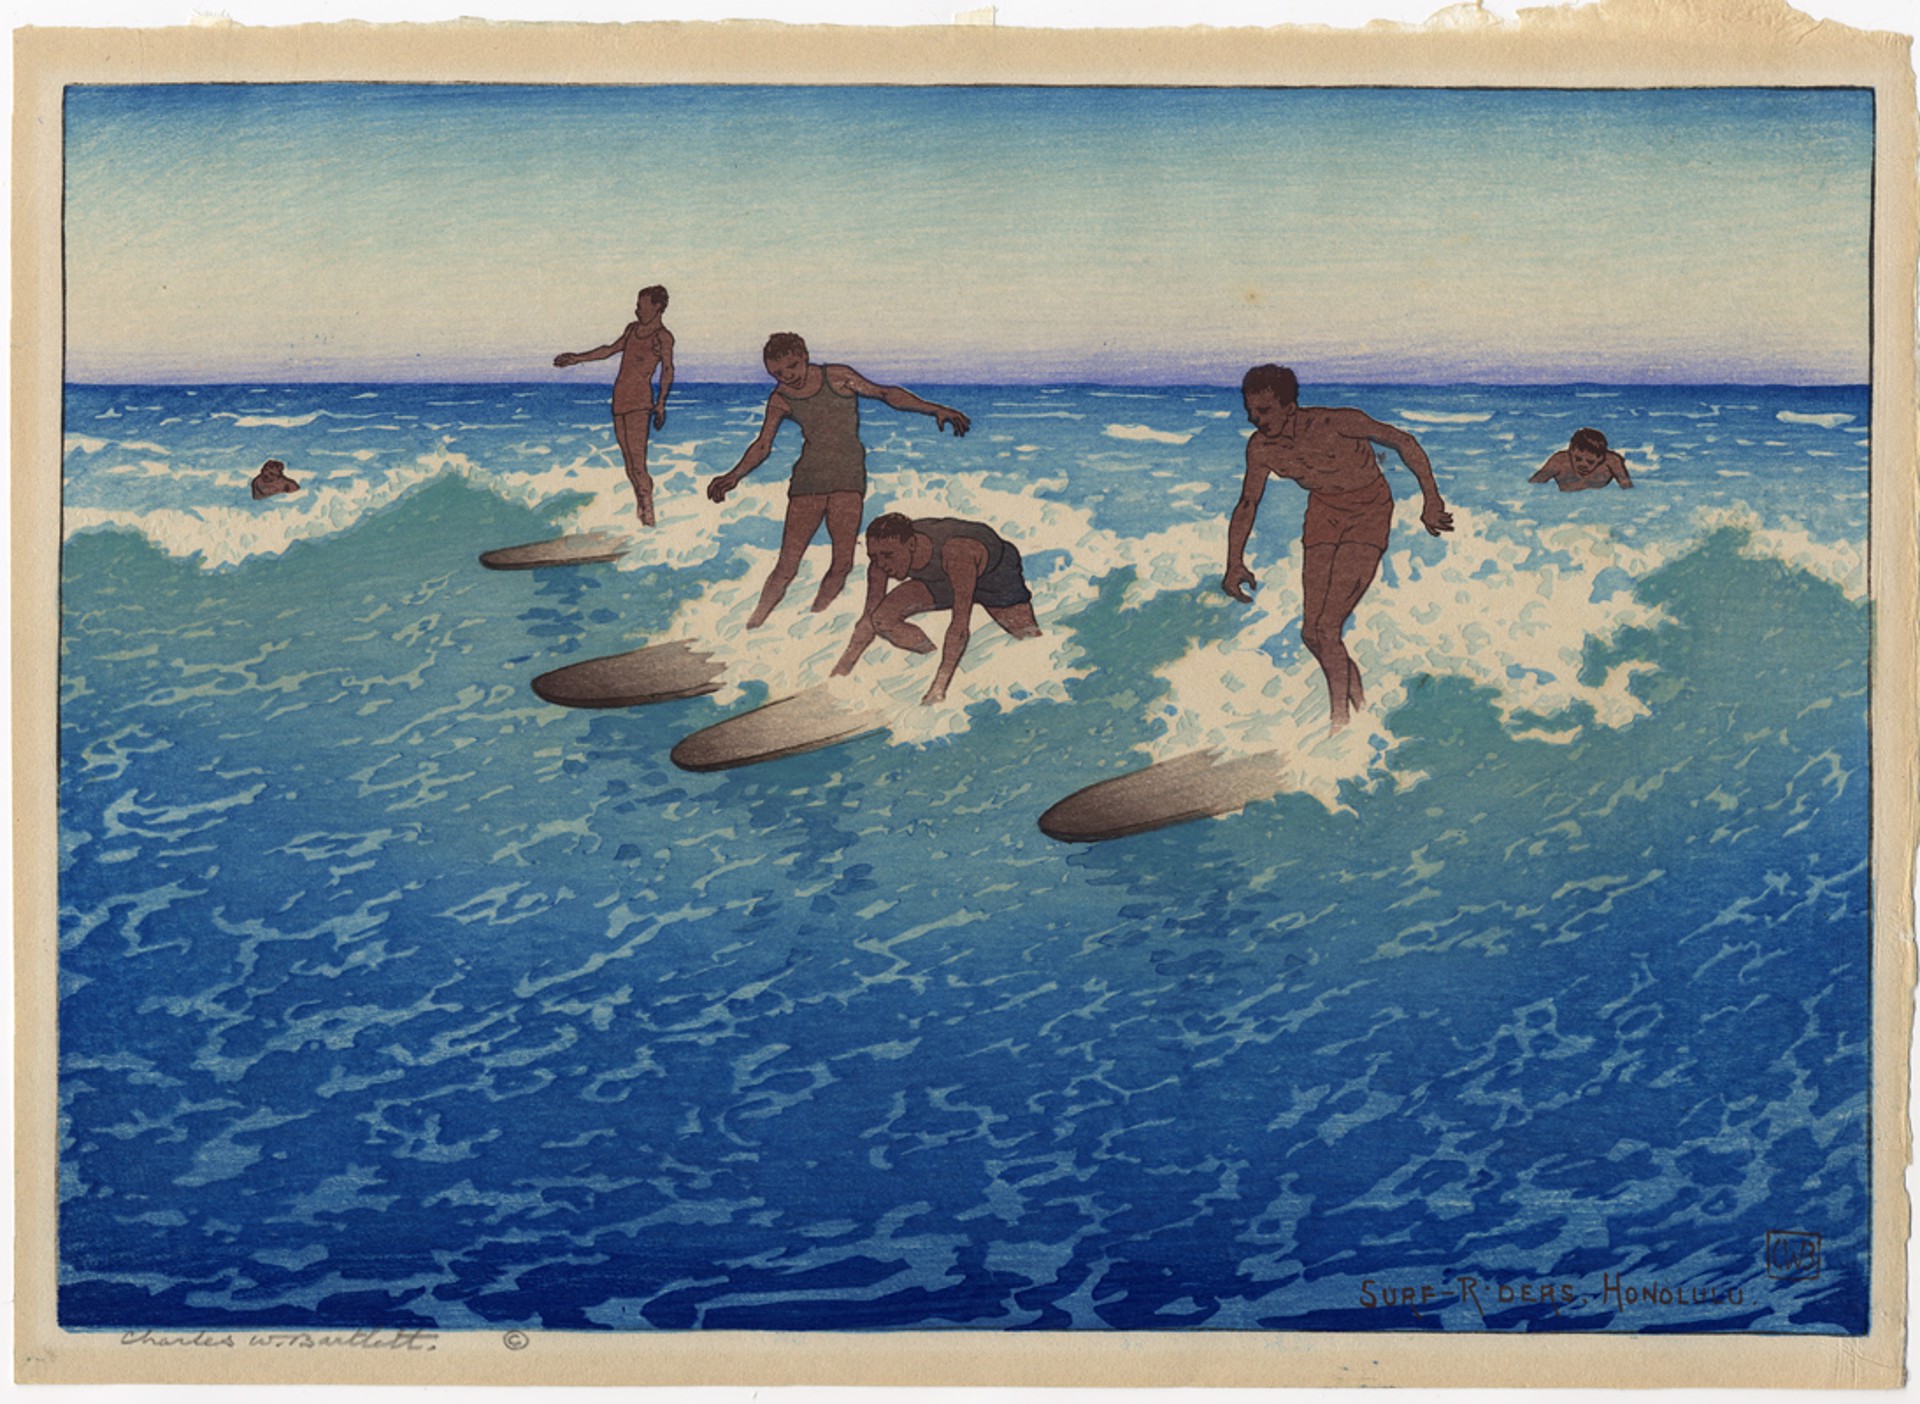 Surfers, Waikiki by Charles Bartlett